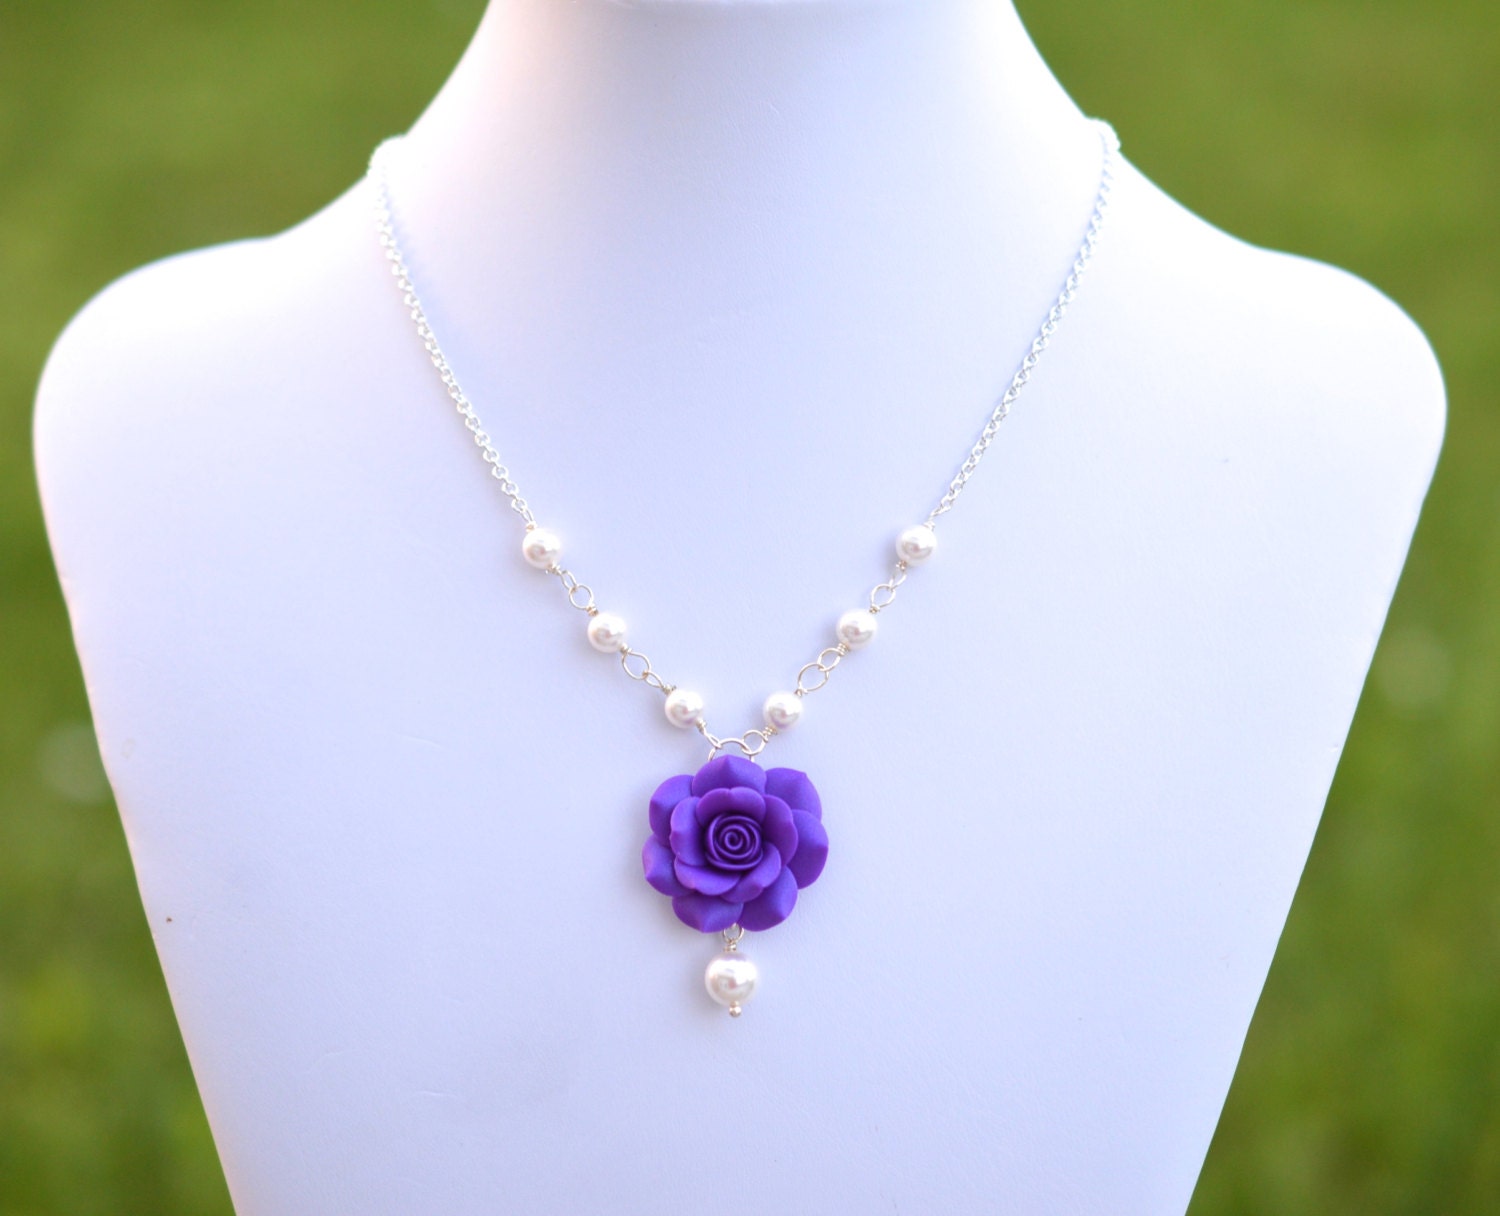 Stunning Deep Purple Rose Necklace